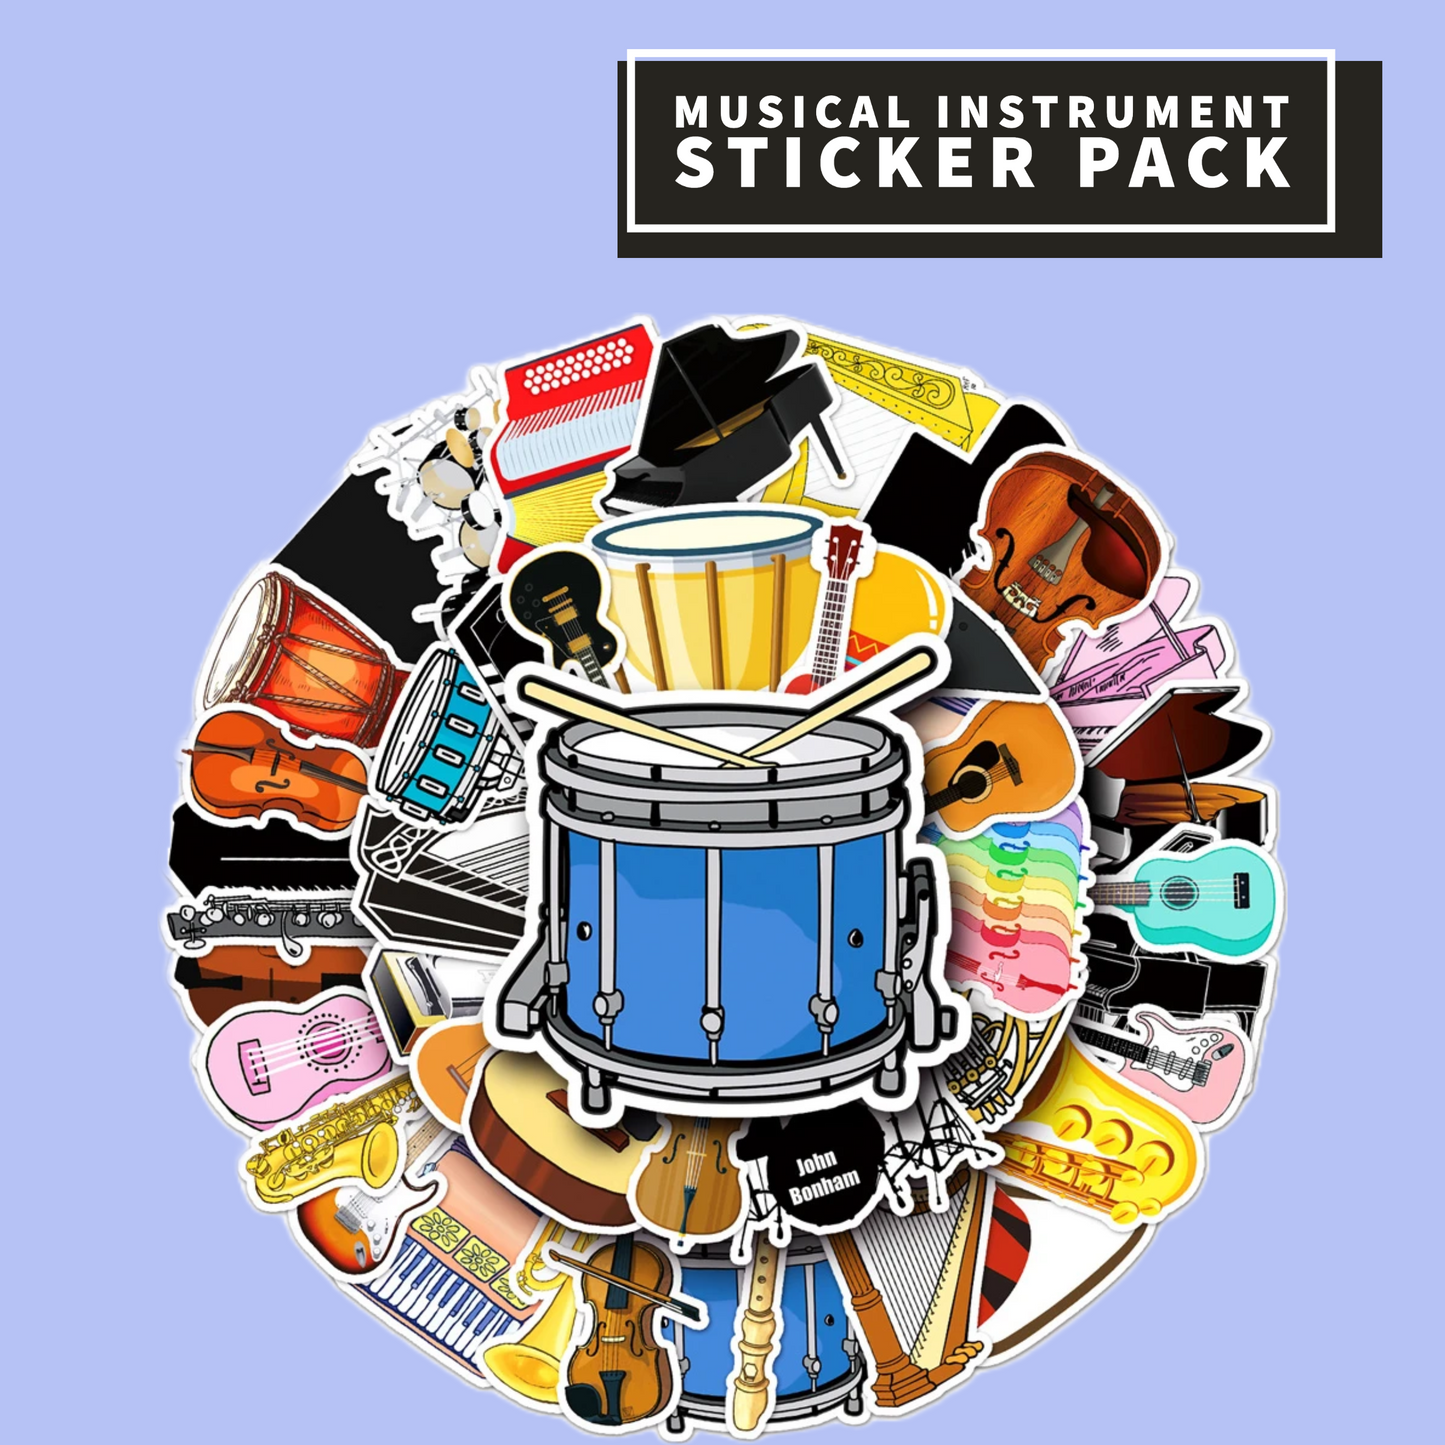 Musical Instrument Sticker Pack (20 pieces)